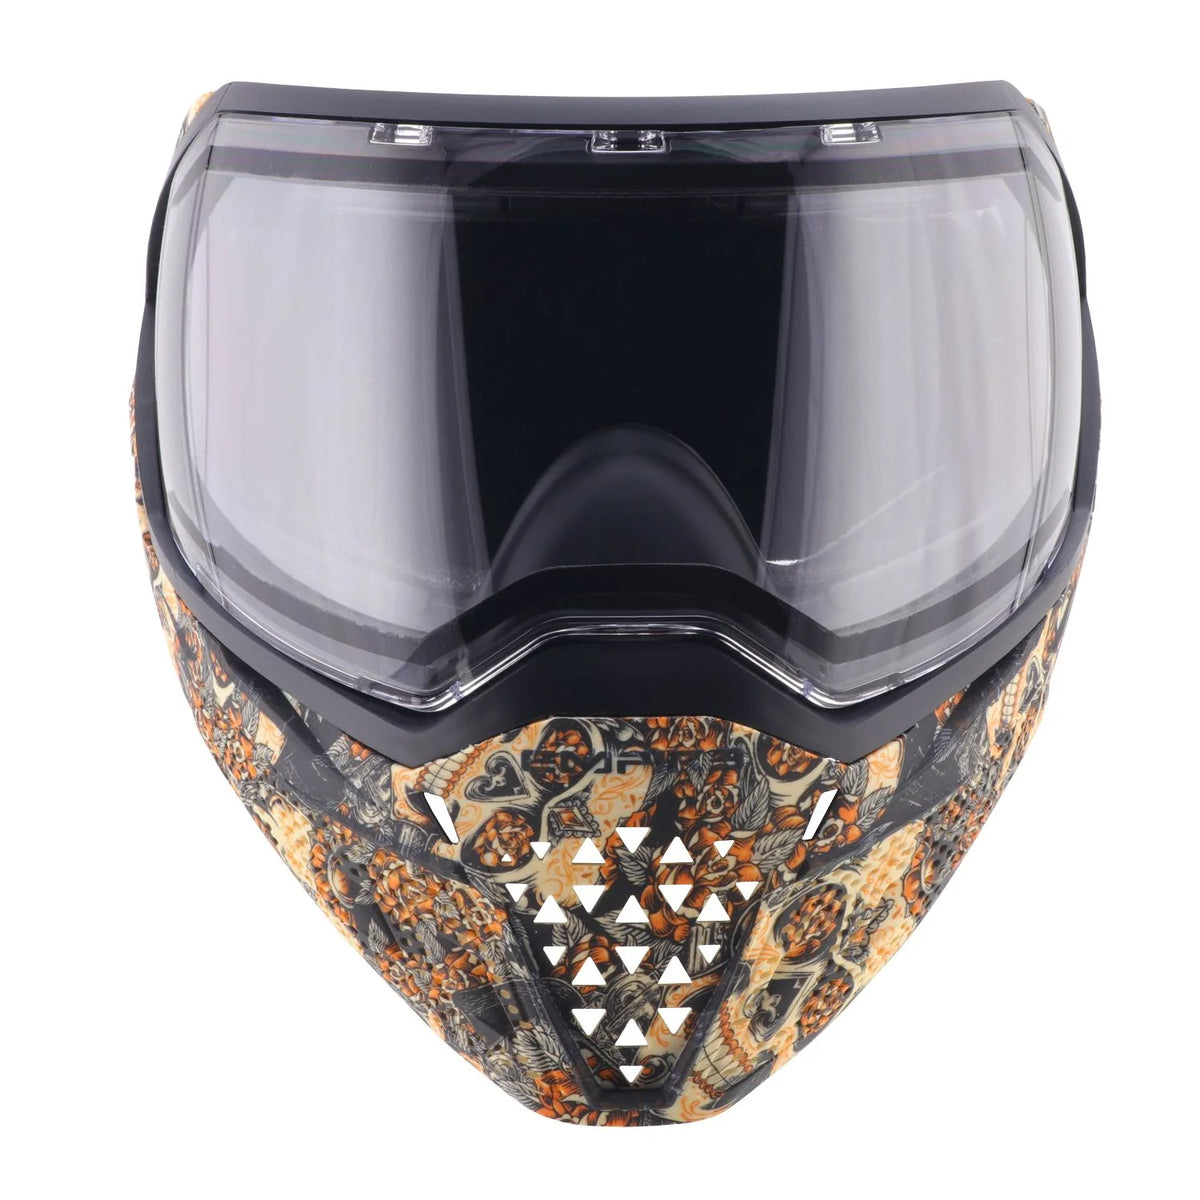 Empire EVS Bandito SE with Thermal Ninja & Thermal Clear Lenses | Shop Airsoft Goggle